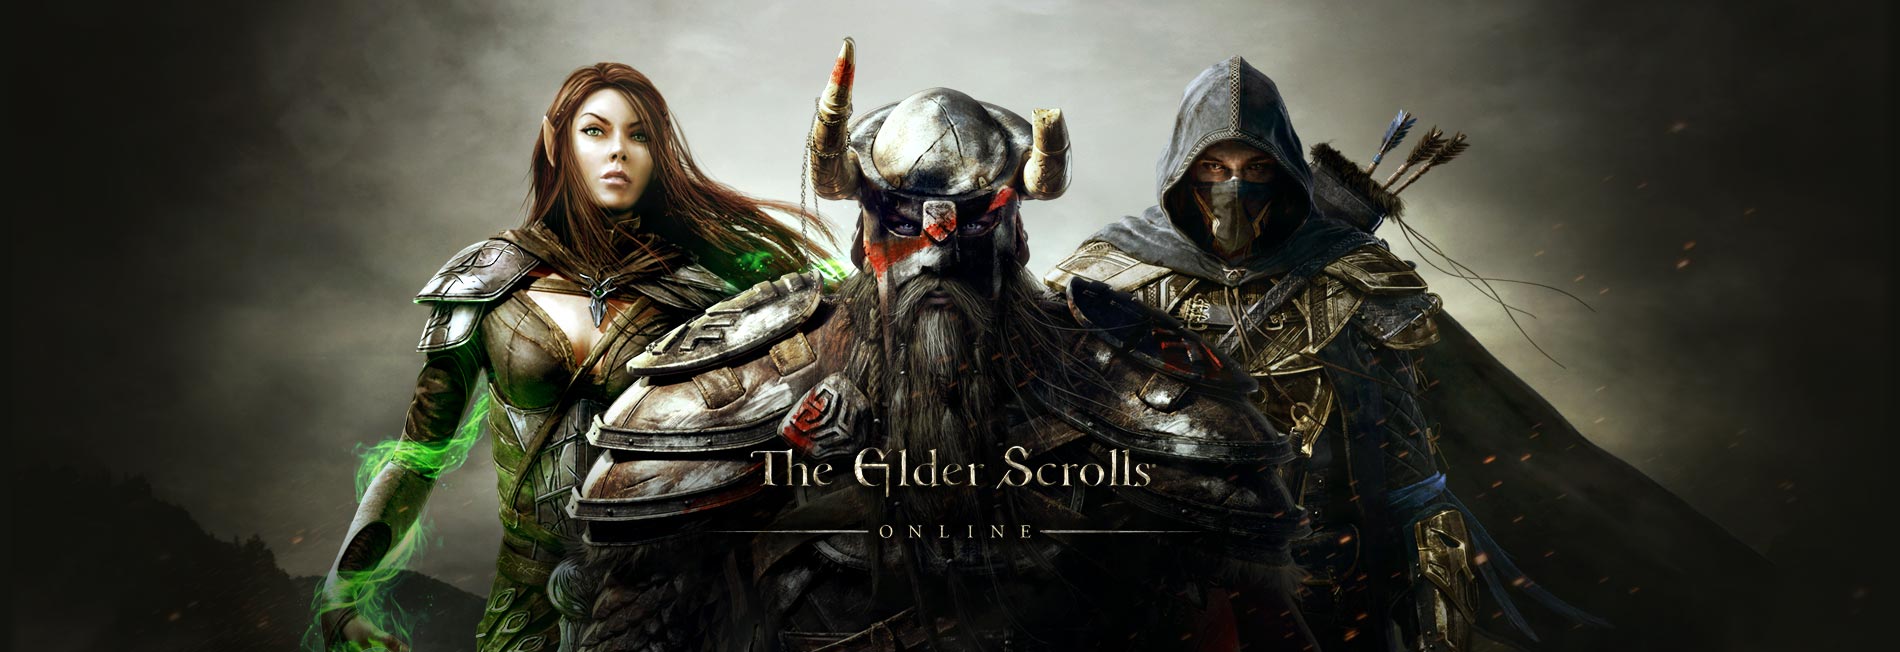 The Elder Scrolls Online Art